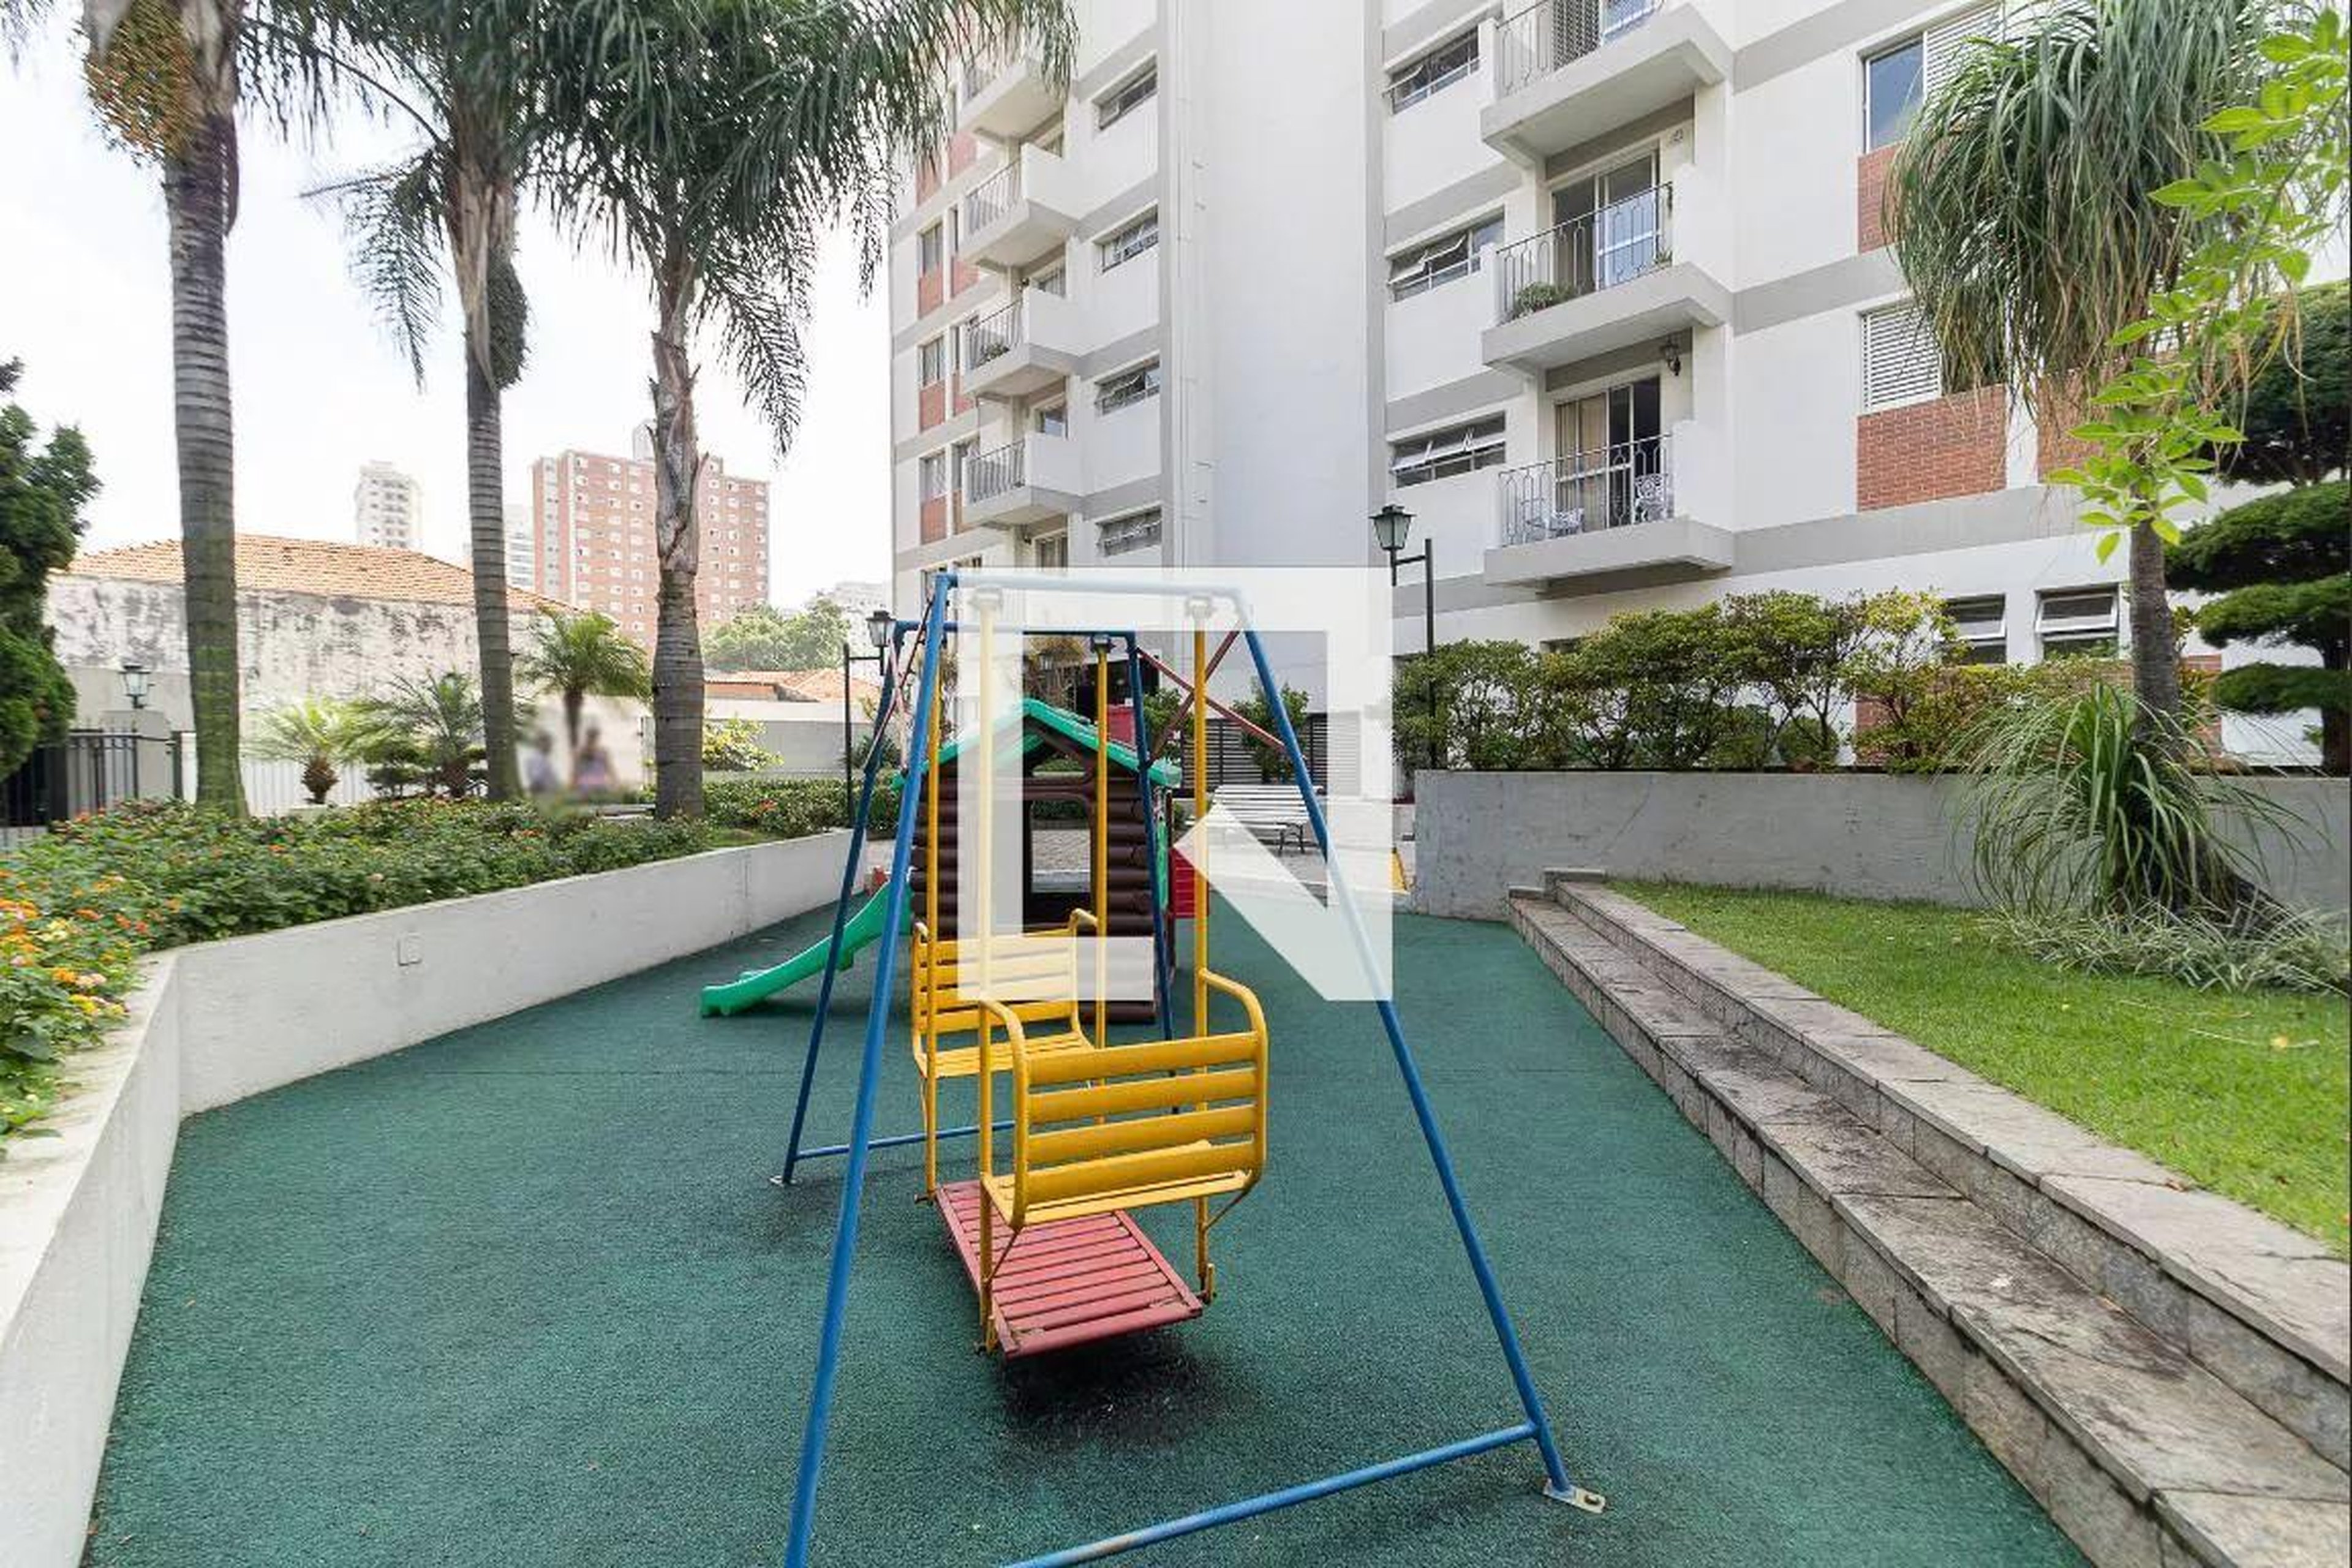 Playground - Casablanca